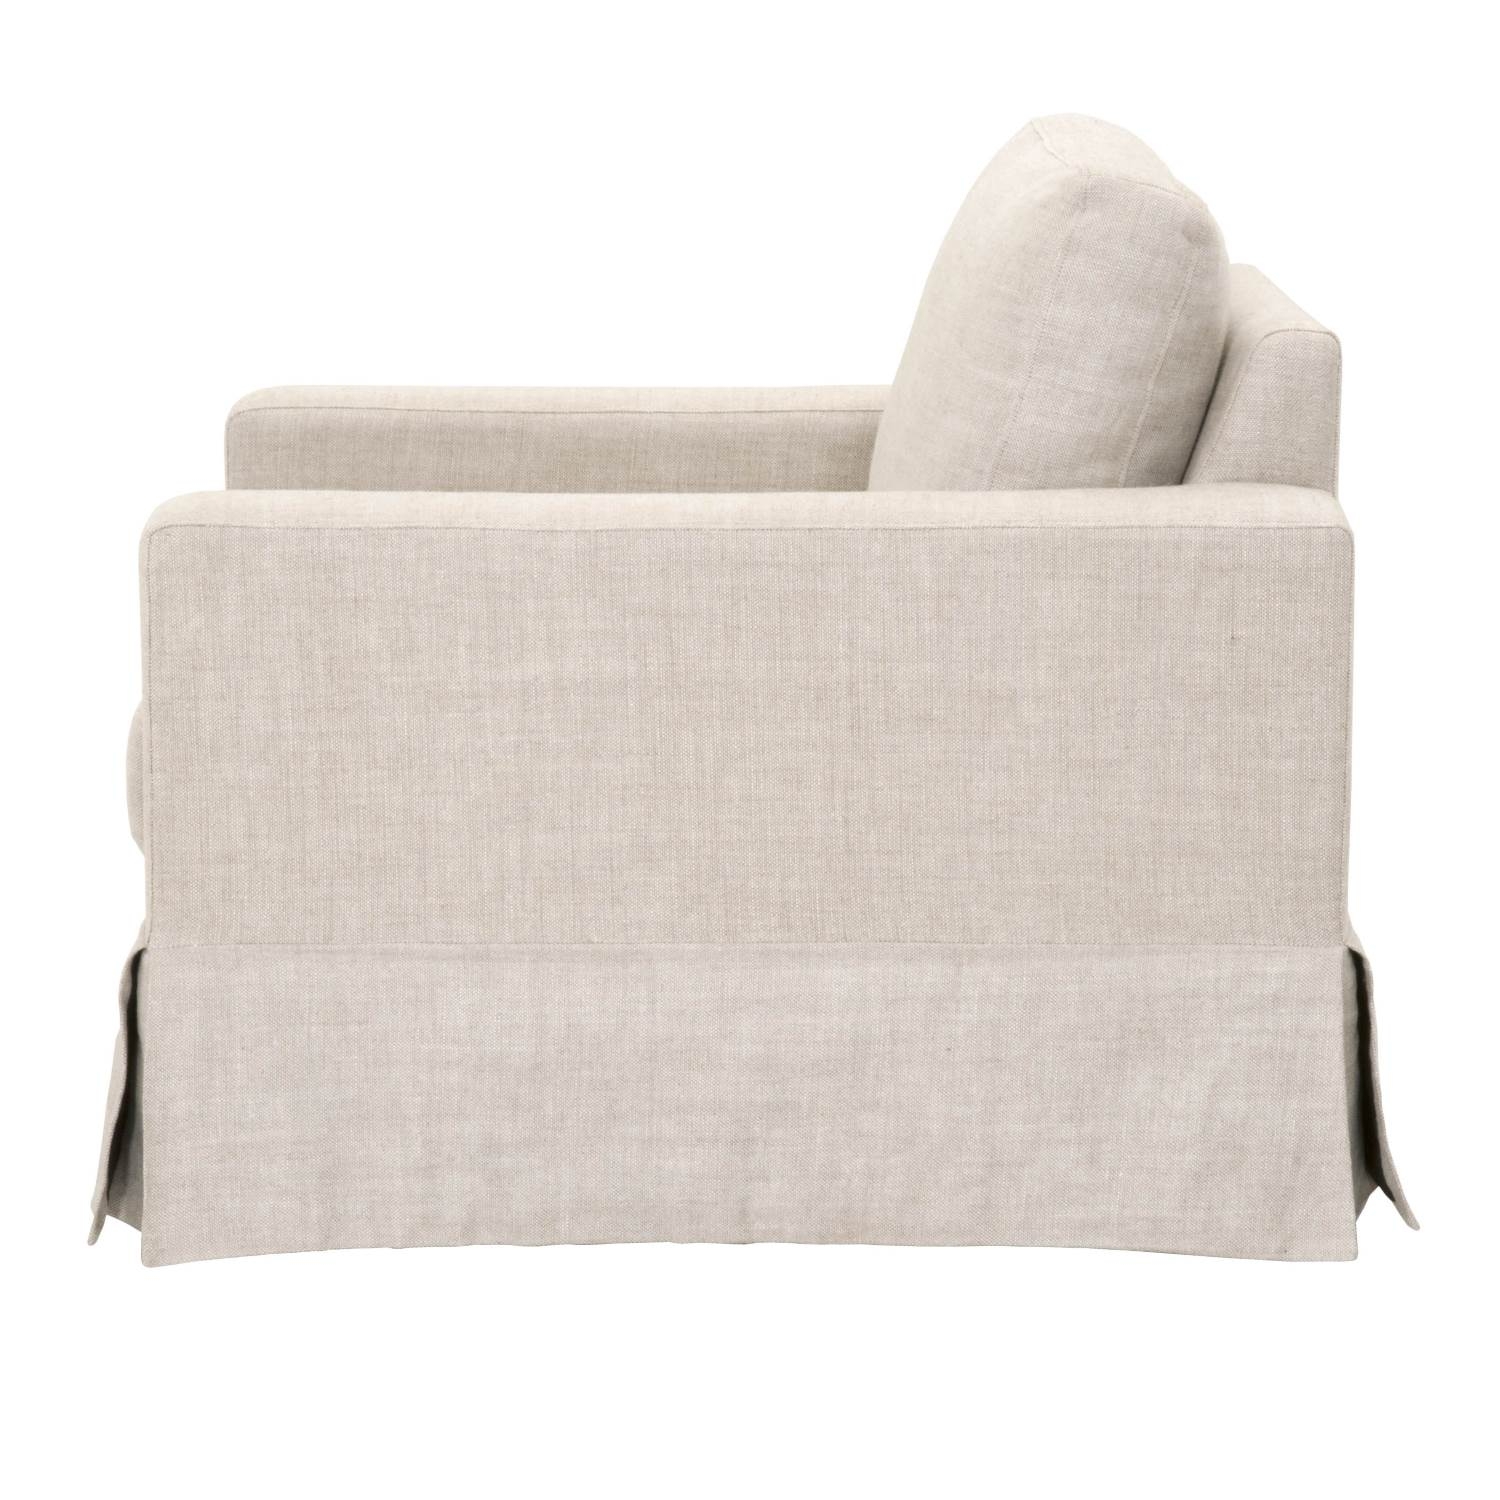 Maxwell Sofa Chair - Image 2